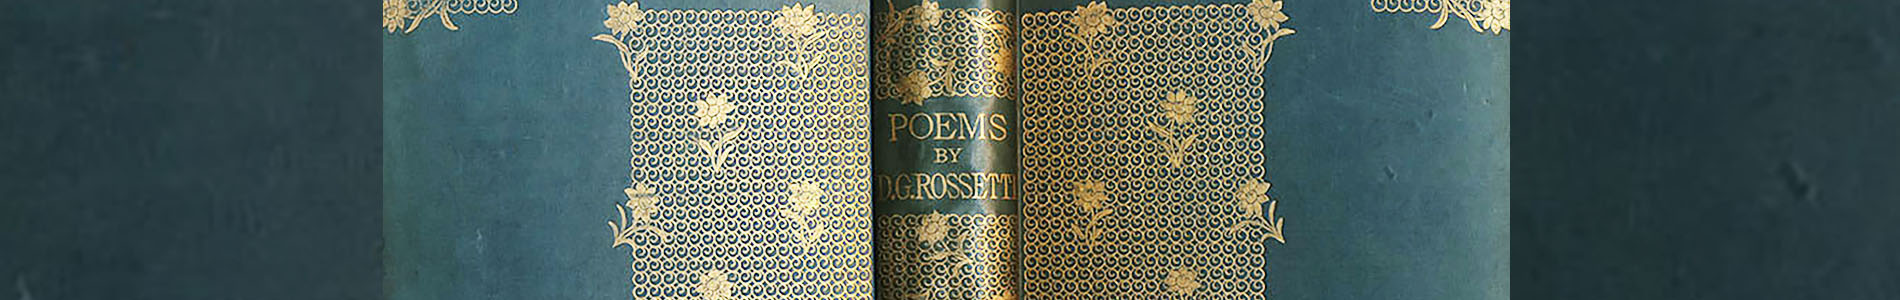 Banner Image for Rossetti’s 